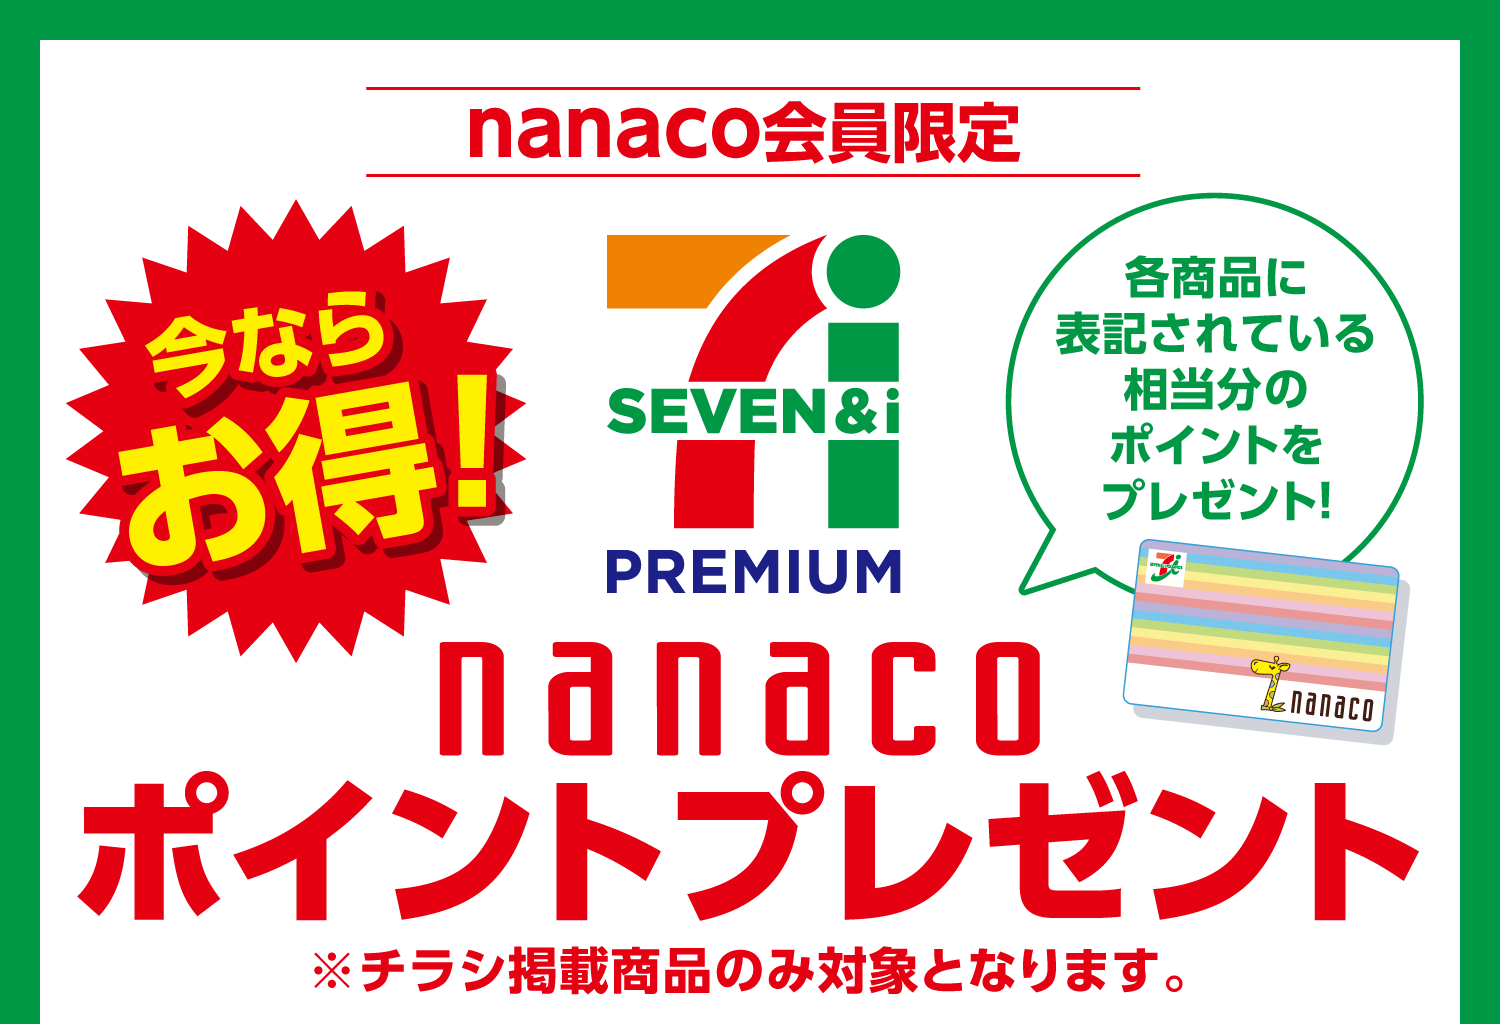 【nanaco会員限定】今ならお得！セブンプレミアムnanacoポイントプレゼント！各商品に表記されている相当分のポイントをプレゼント！※チラシ掲載商品のみ対象となります。